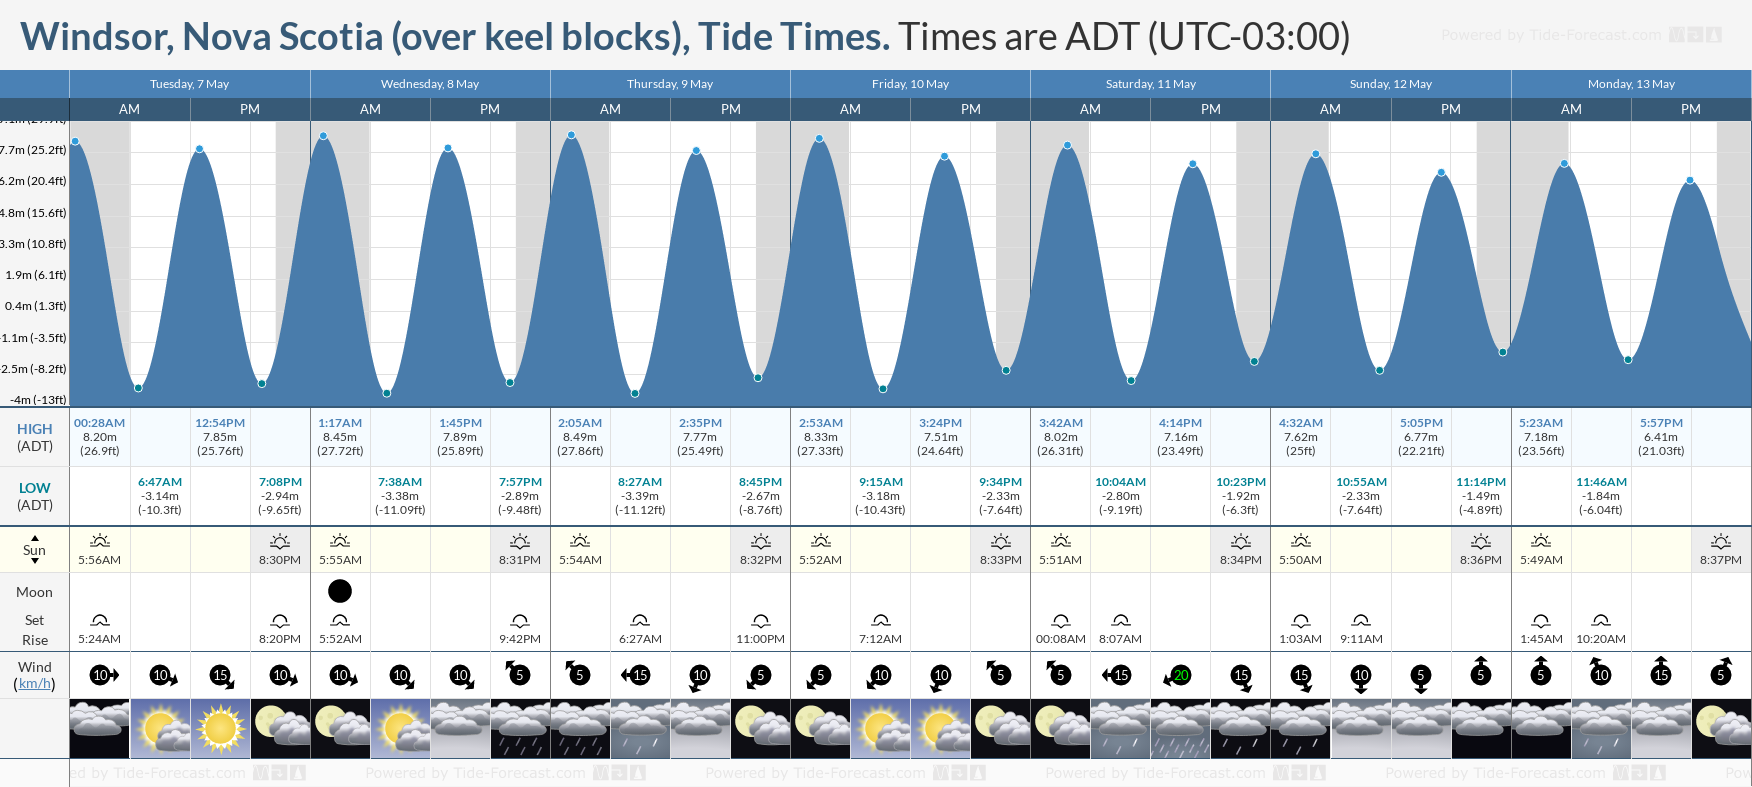 Windsor, Nova Scotia (over keel blocks) Tide Chart including high and low tide tide times for the next 7 days